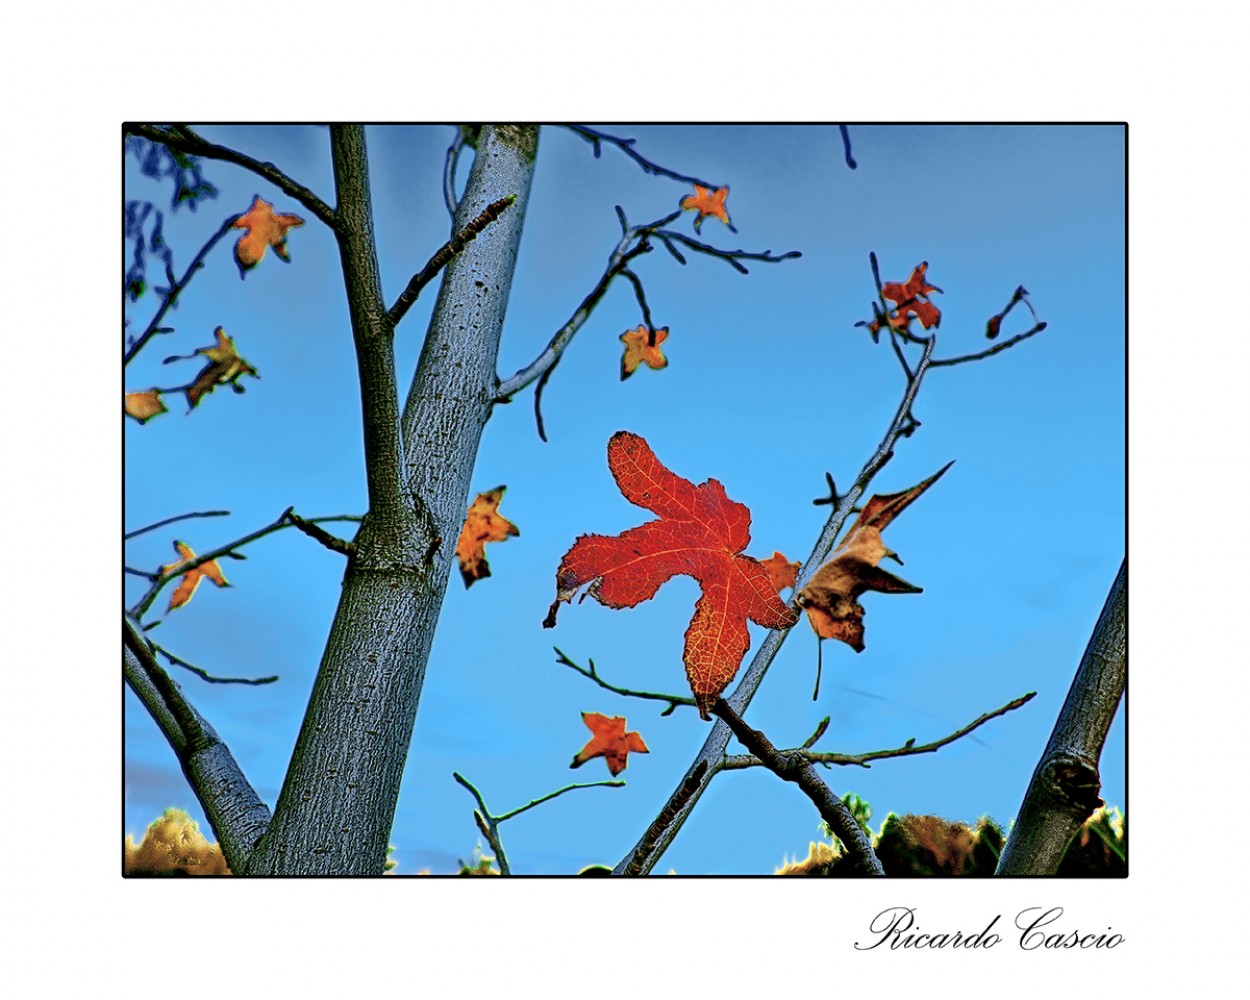 "Como mariposas de otoo" de Ricardo Cascio